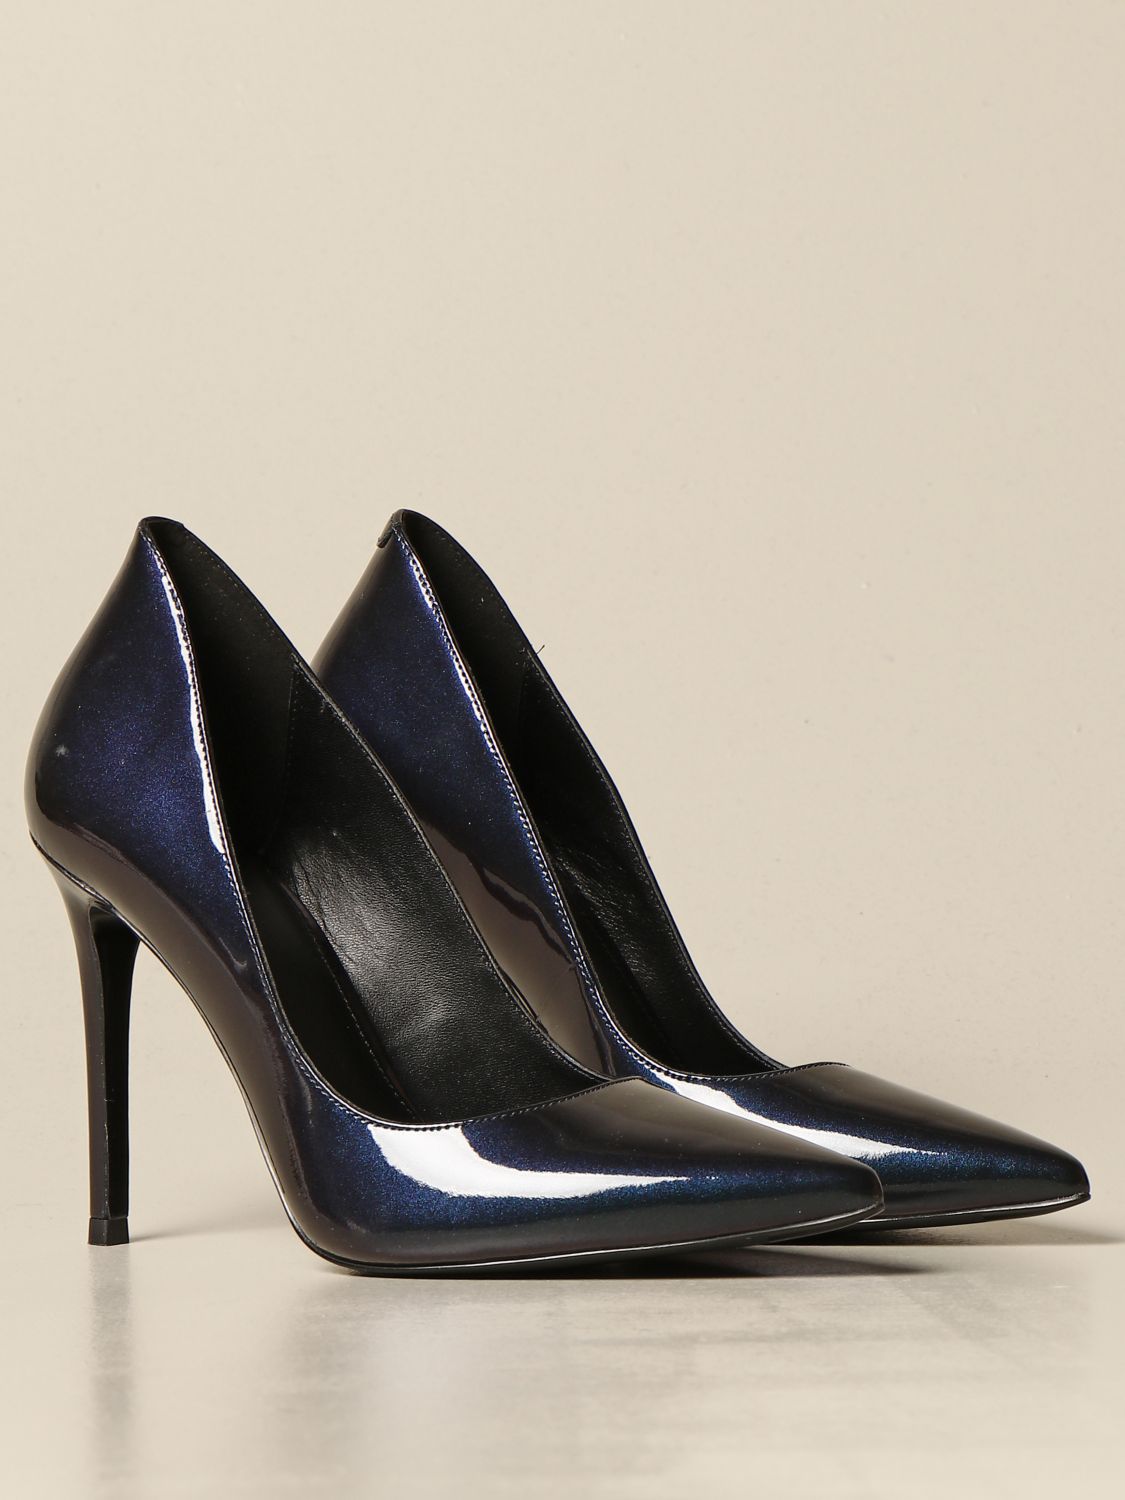 Keke Michael Michael Kors pumps in iridescent leather | High Heel Shoes ...